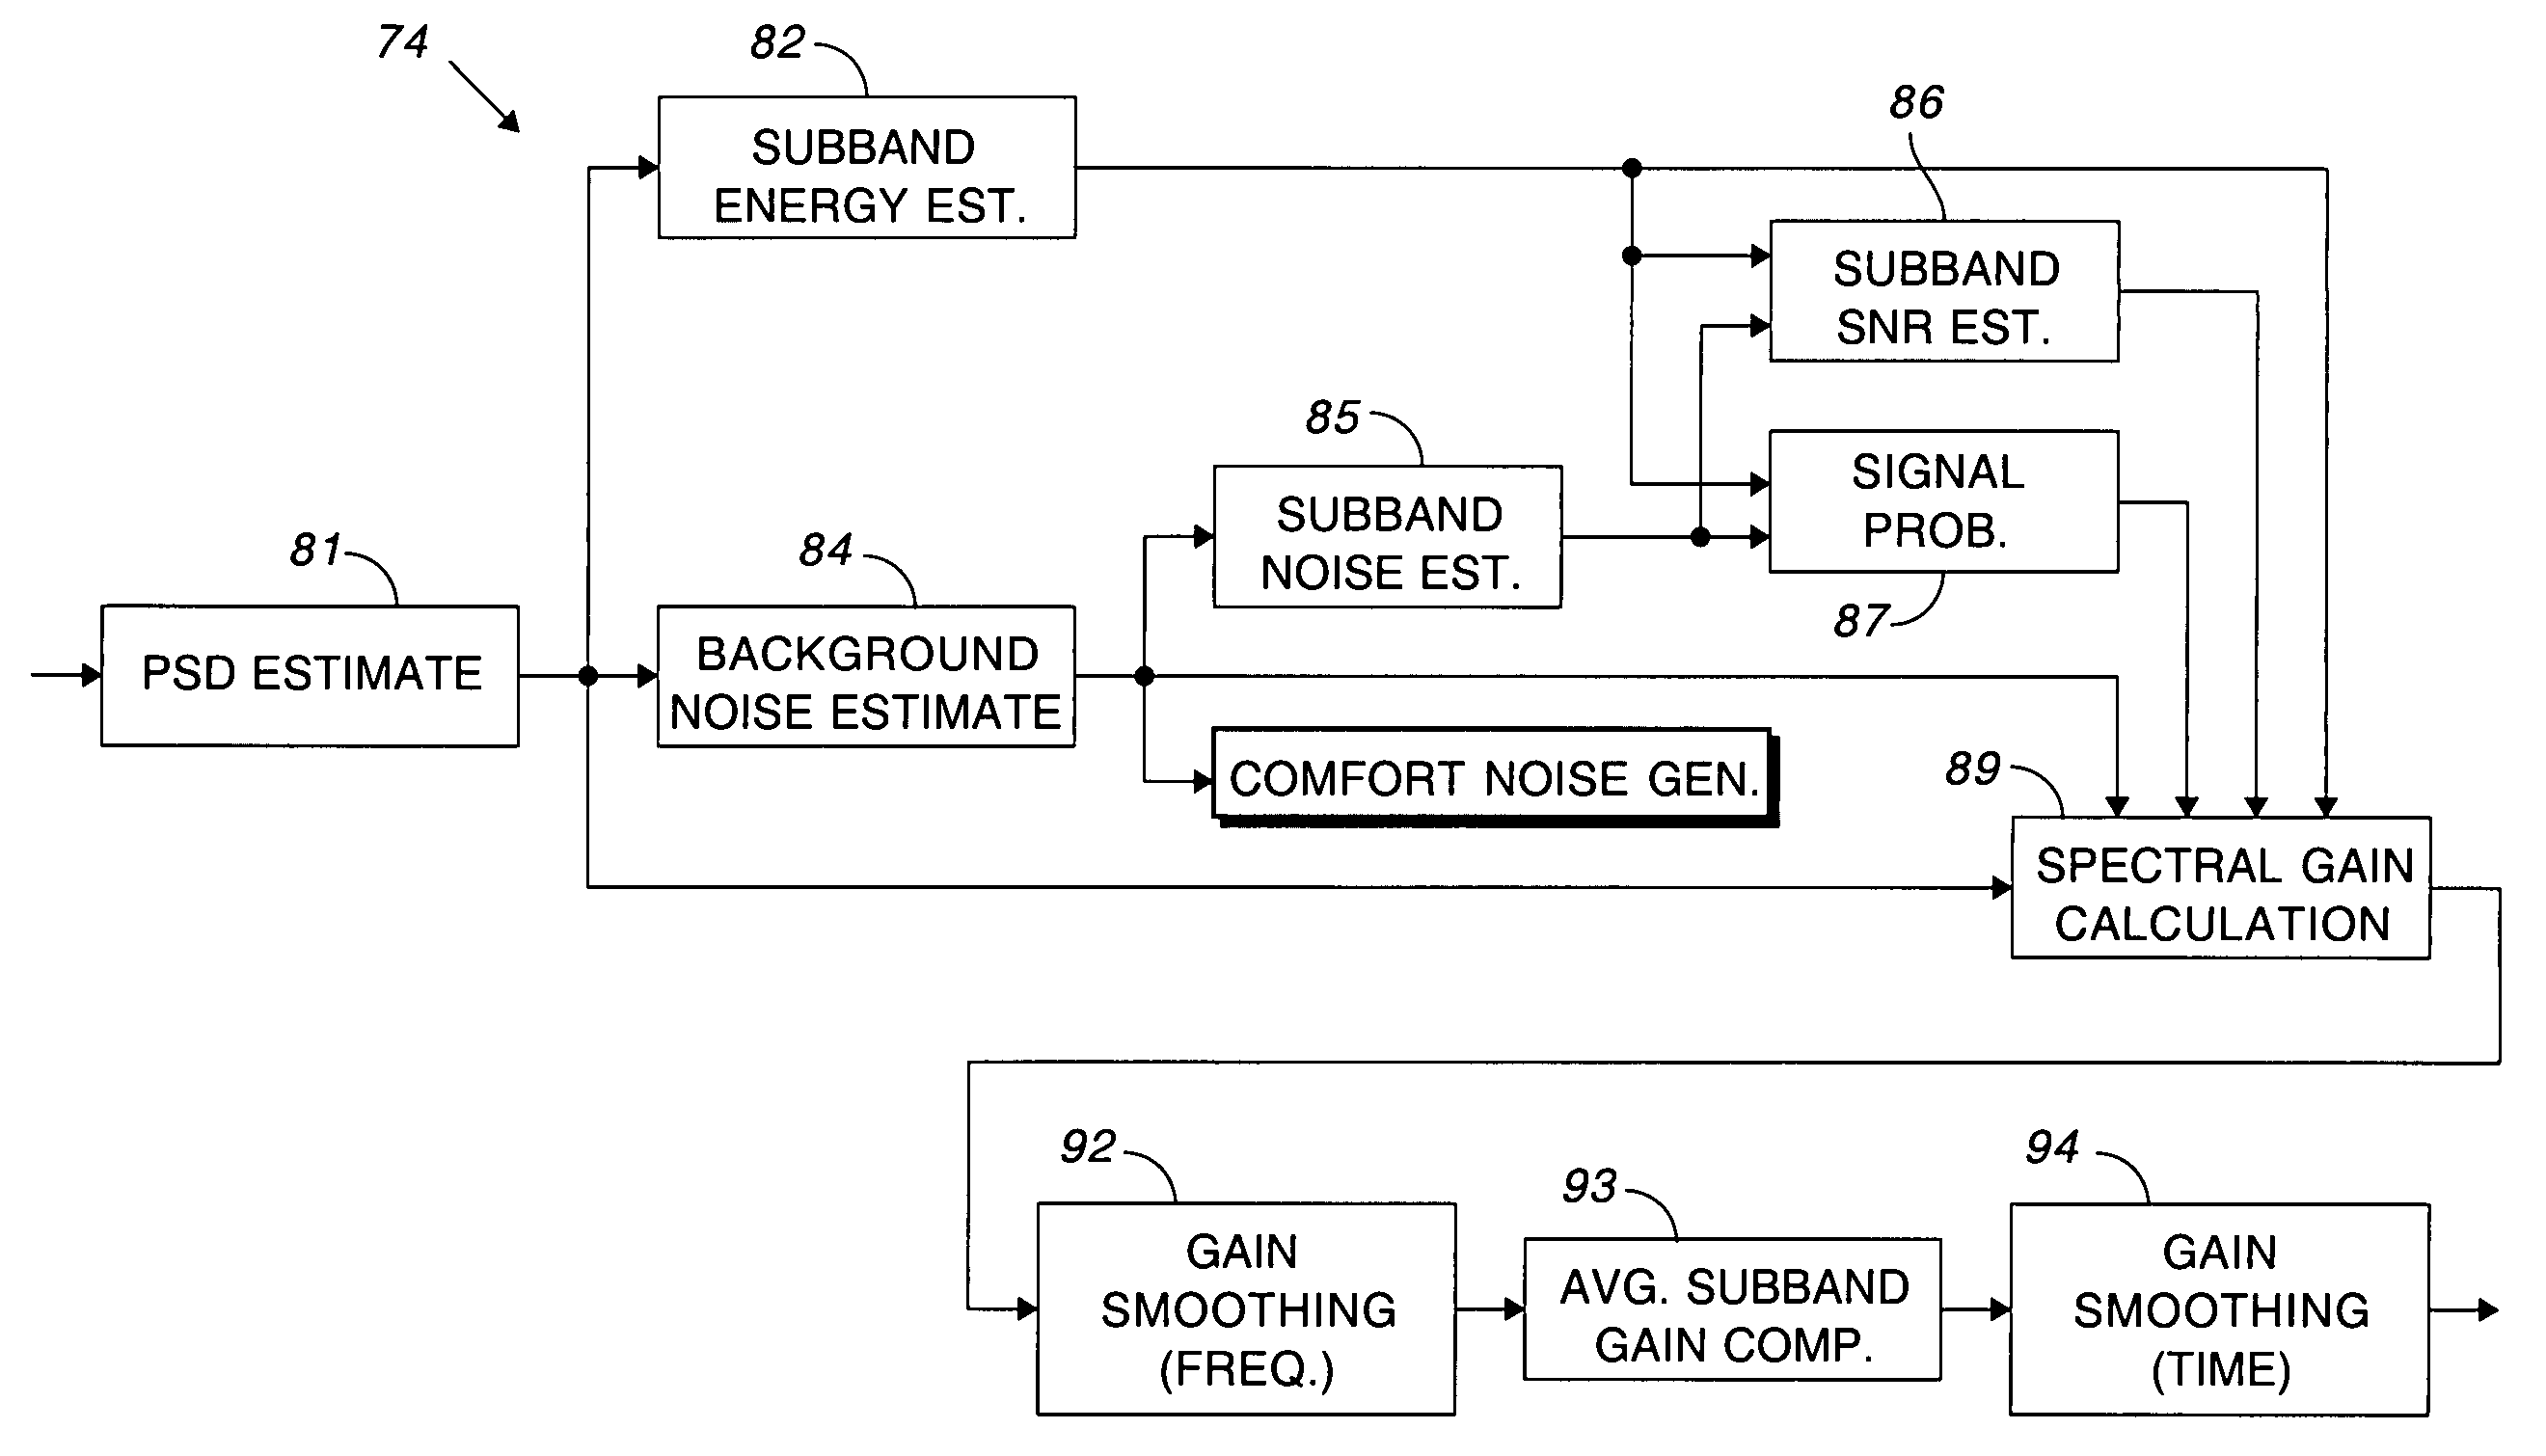 Comfort noise generator using modified Doblinger noise estimate